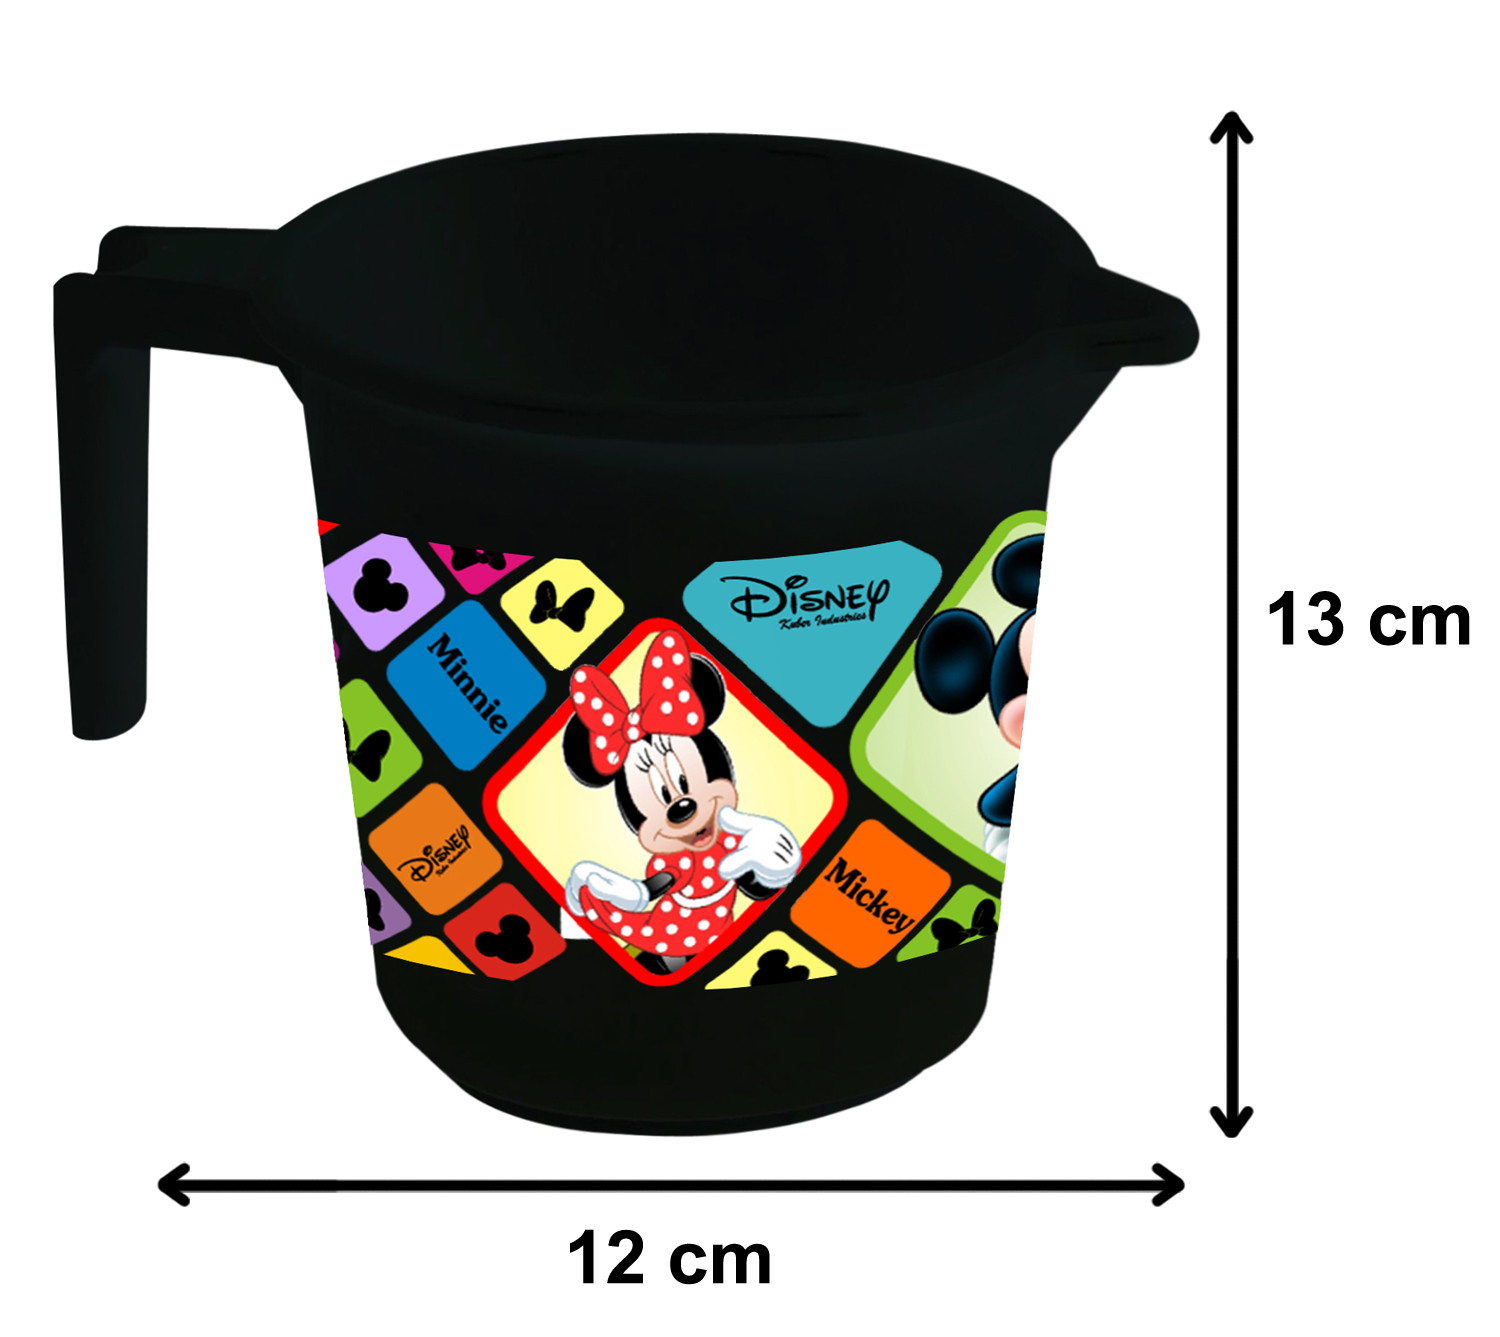 Kuber Industries Disney Mickey Minnie Print 4 Pieces Unbreakable Virgin Plastic Bathroom Bucket With Mug Set- Cream & Black, (2 Pc 16 LTR Bucket & 2 Pc 500 ML Mug) -HS_35_KUBMART17951